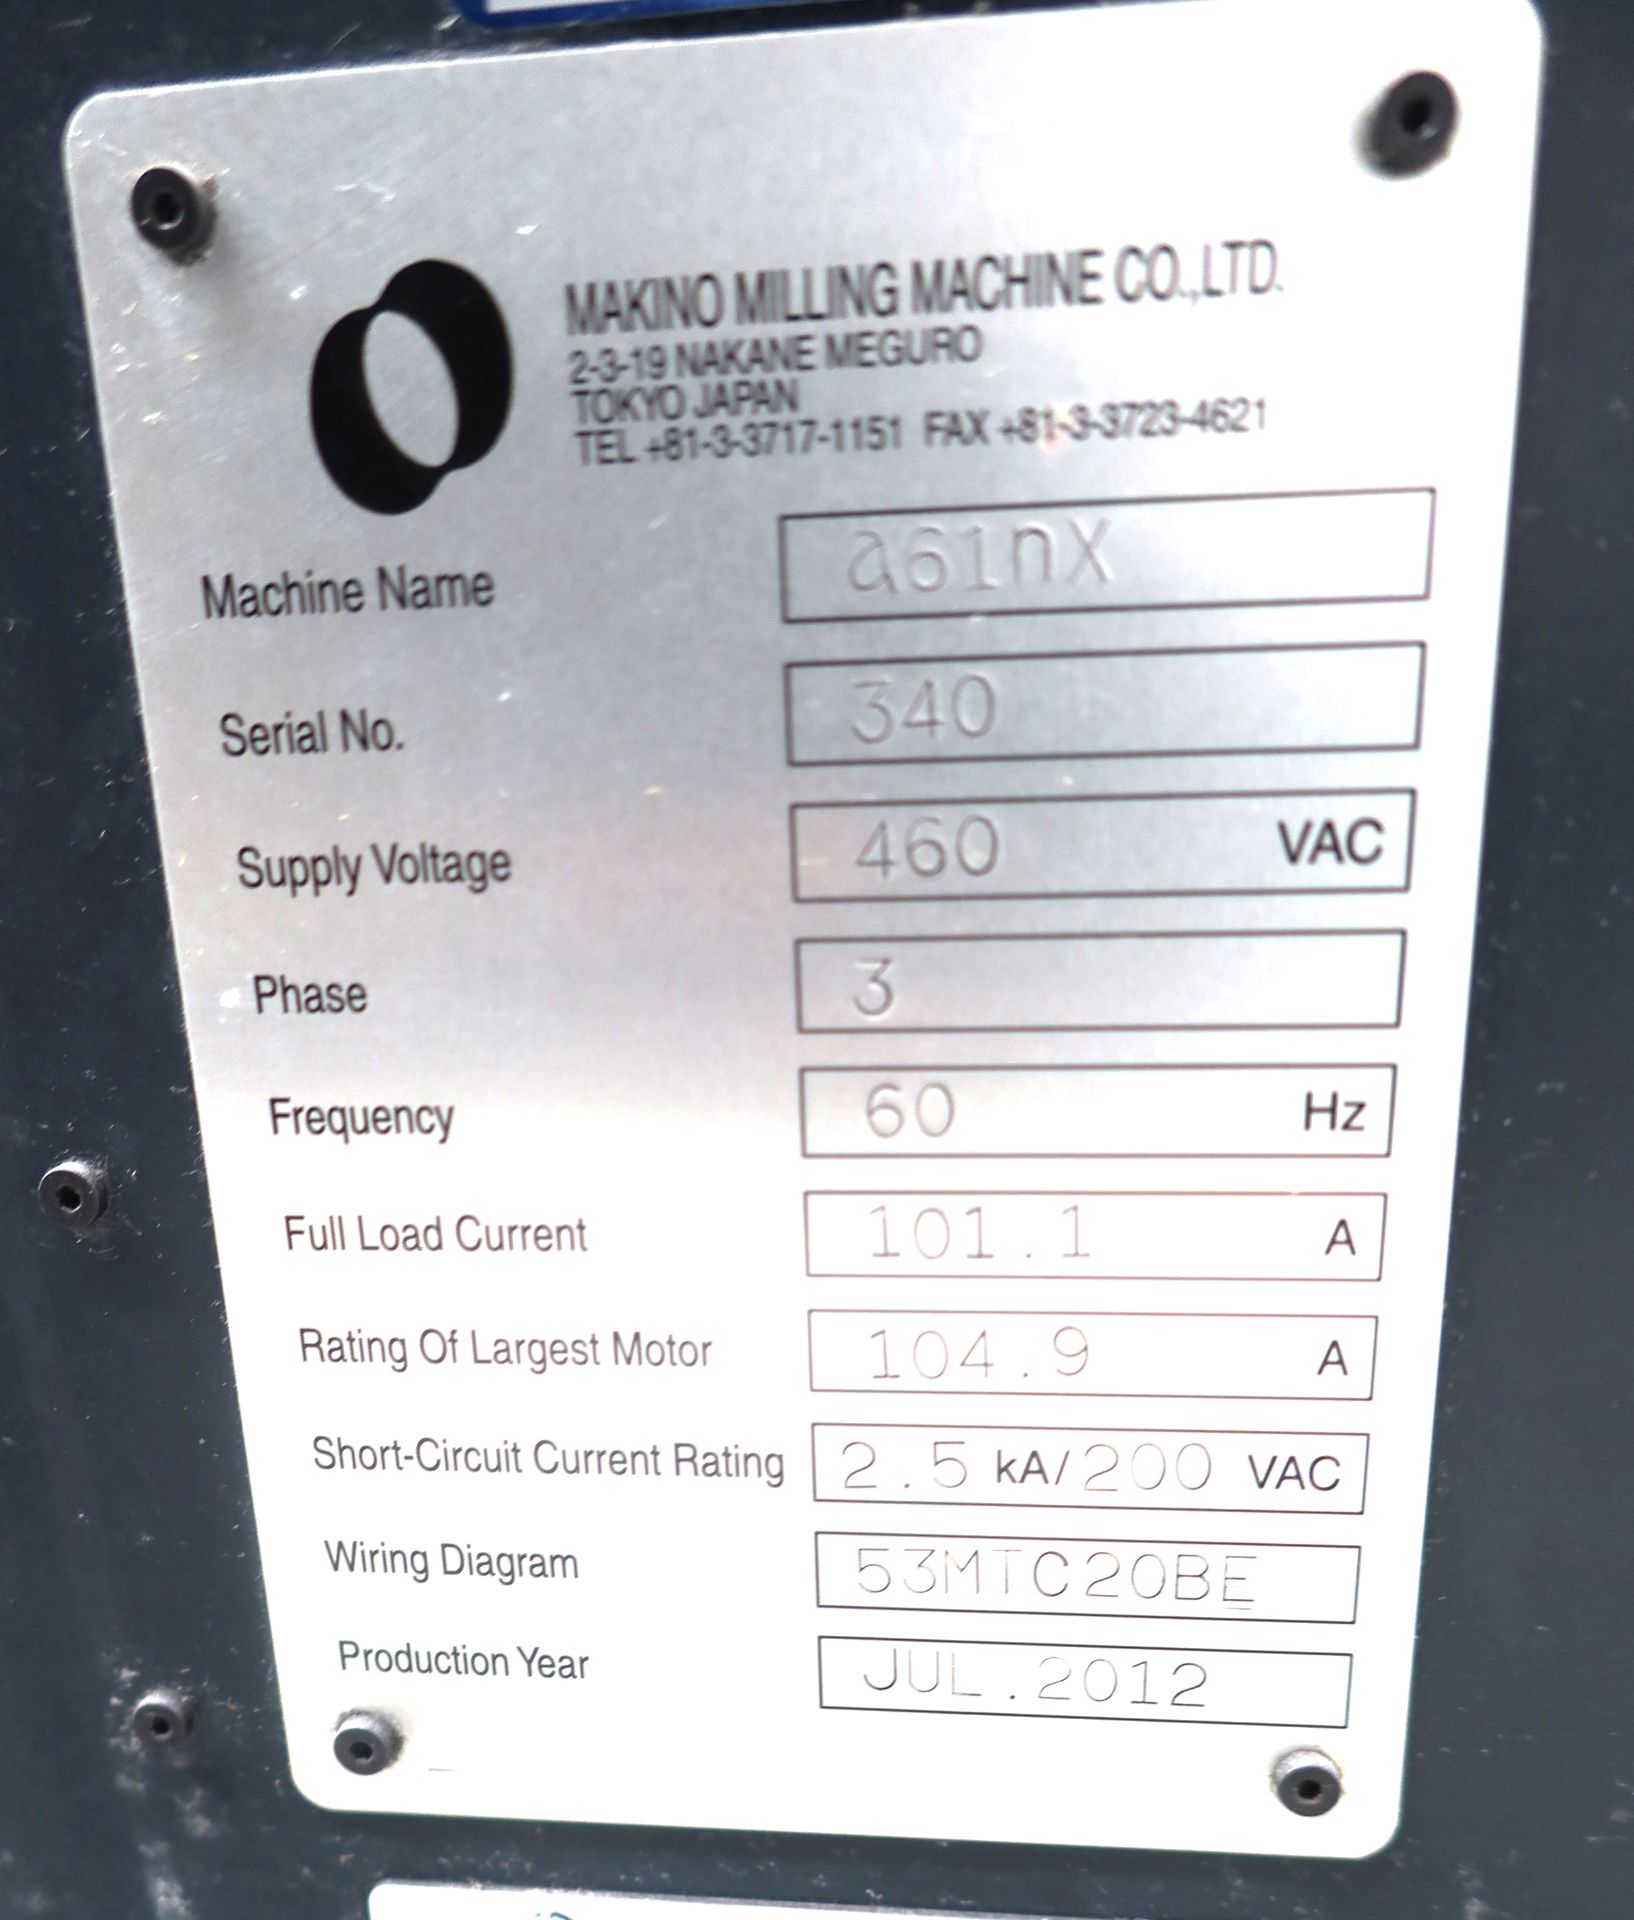 20" X 20" MAKINO A61NX CNC 4-AXIS HORIZONTAL MACHINING CENTER, S/N 340, NEW 2012 - Image 11 of 11